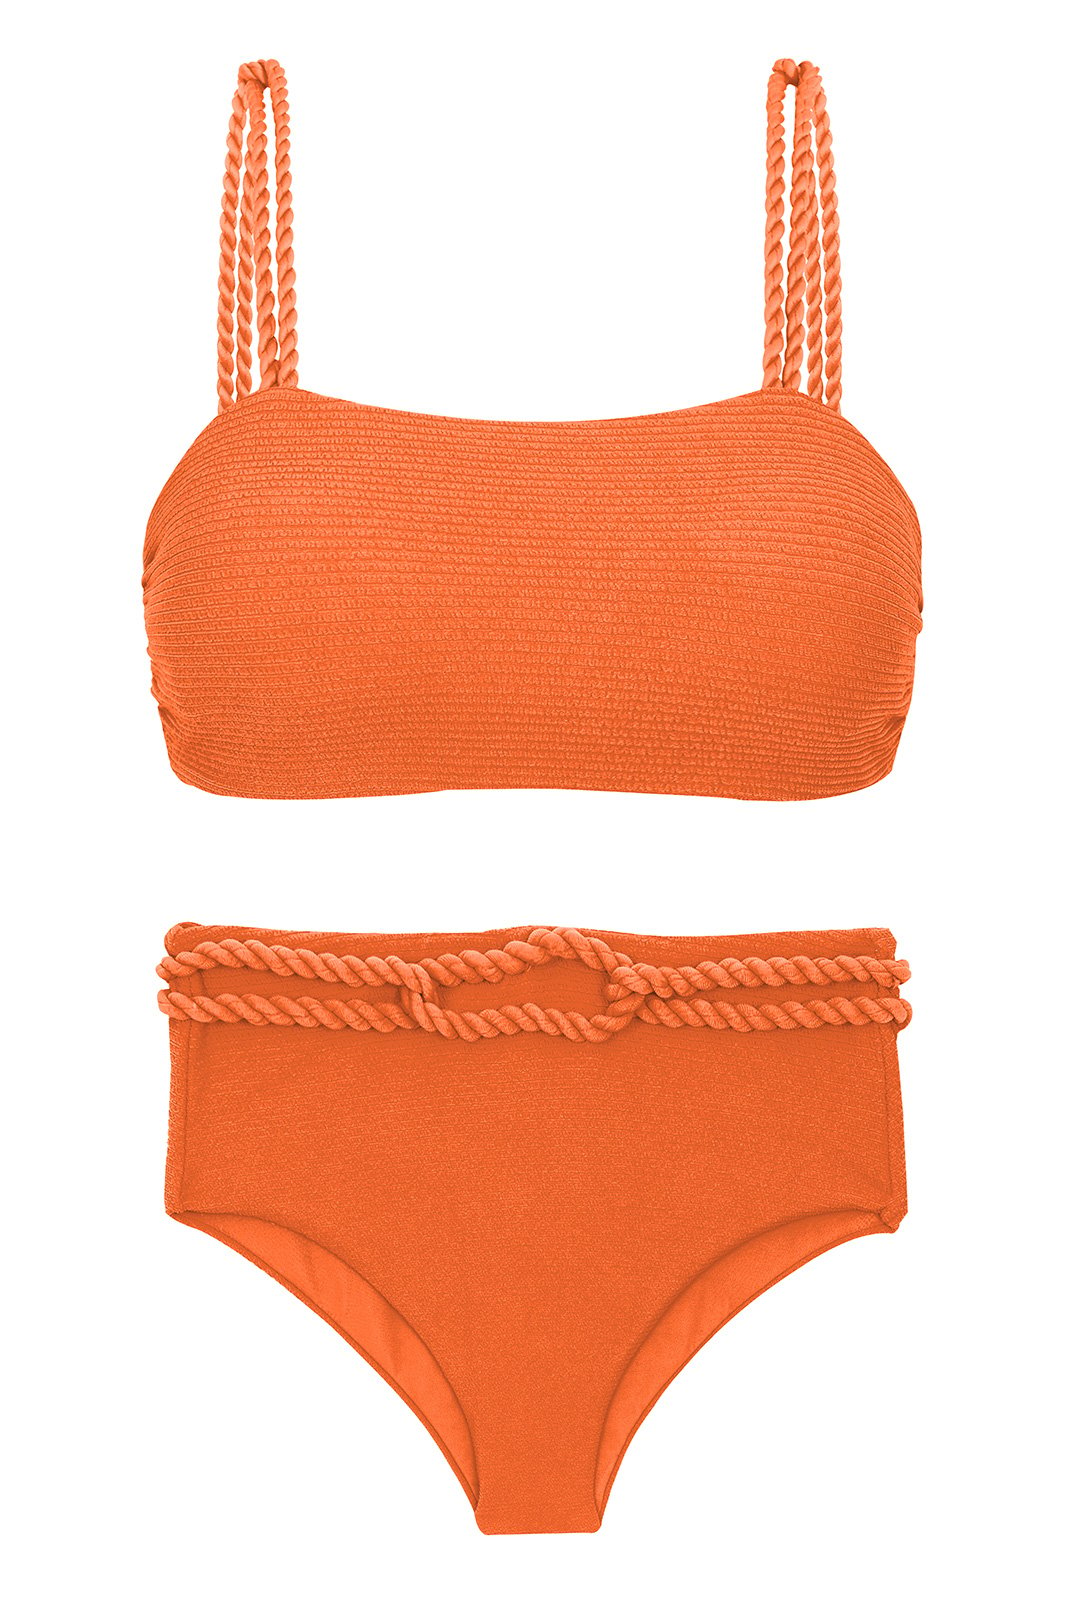 pakket gebed nabootsen Orange Textured High Waist Bikini With Twisted Rope - Set  St-tropez-tangerina Reto Hotpant-high - Rio de Sol